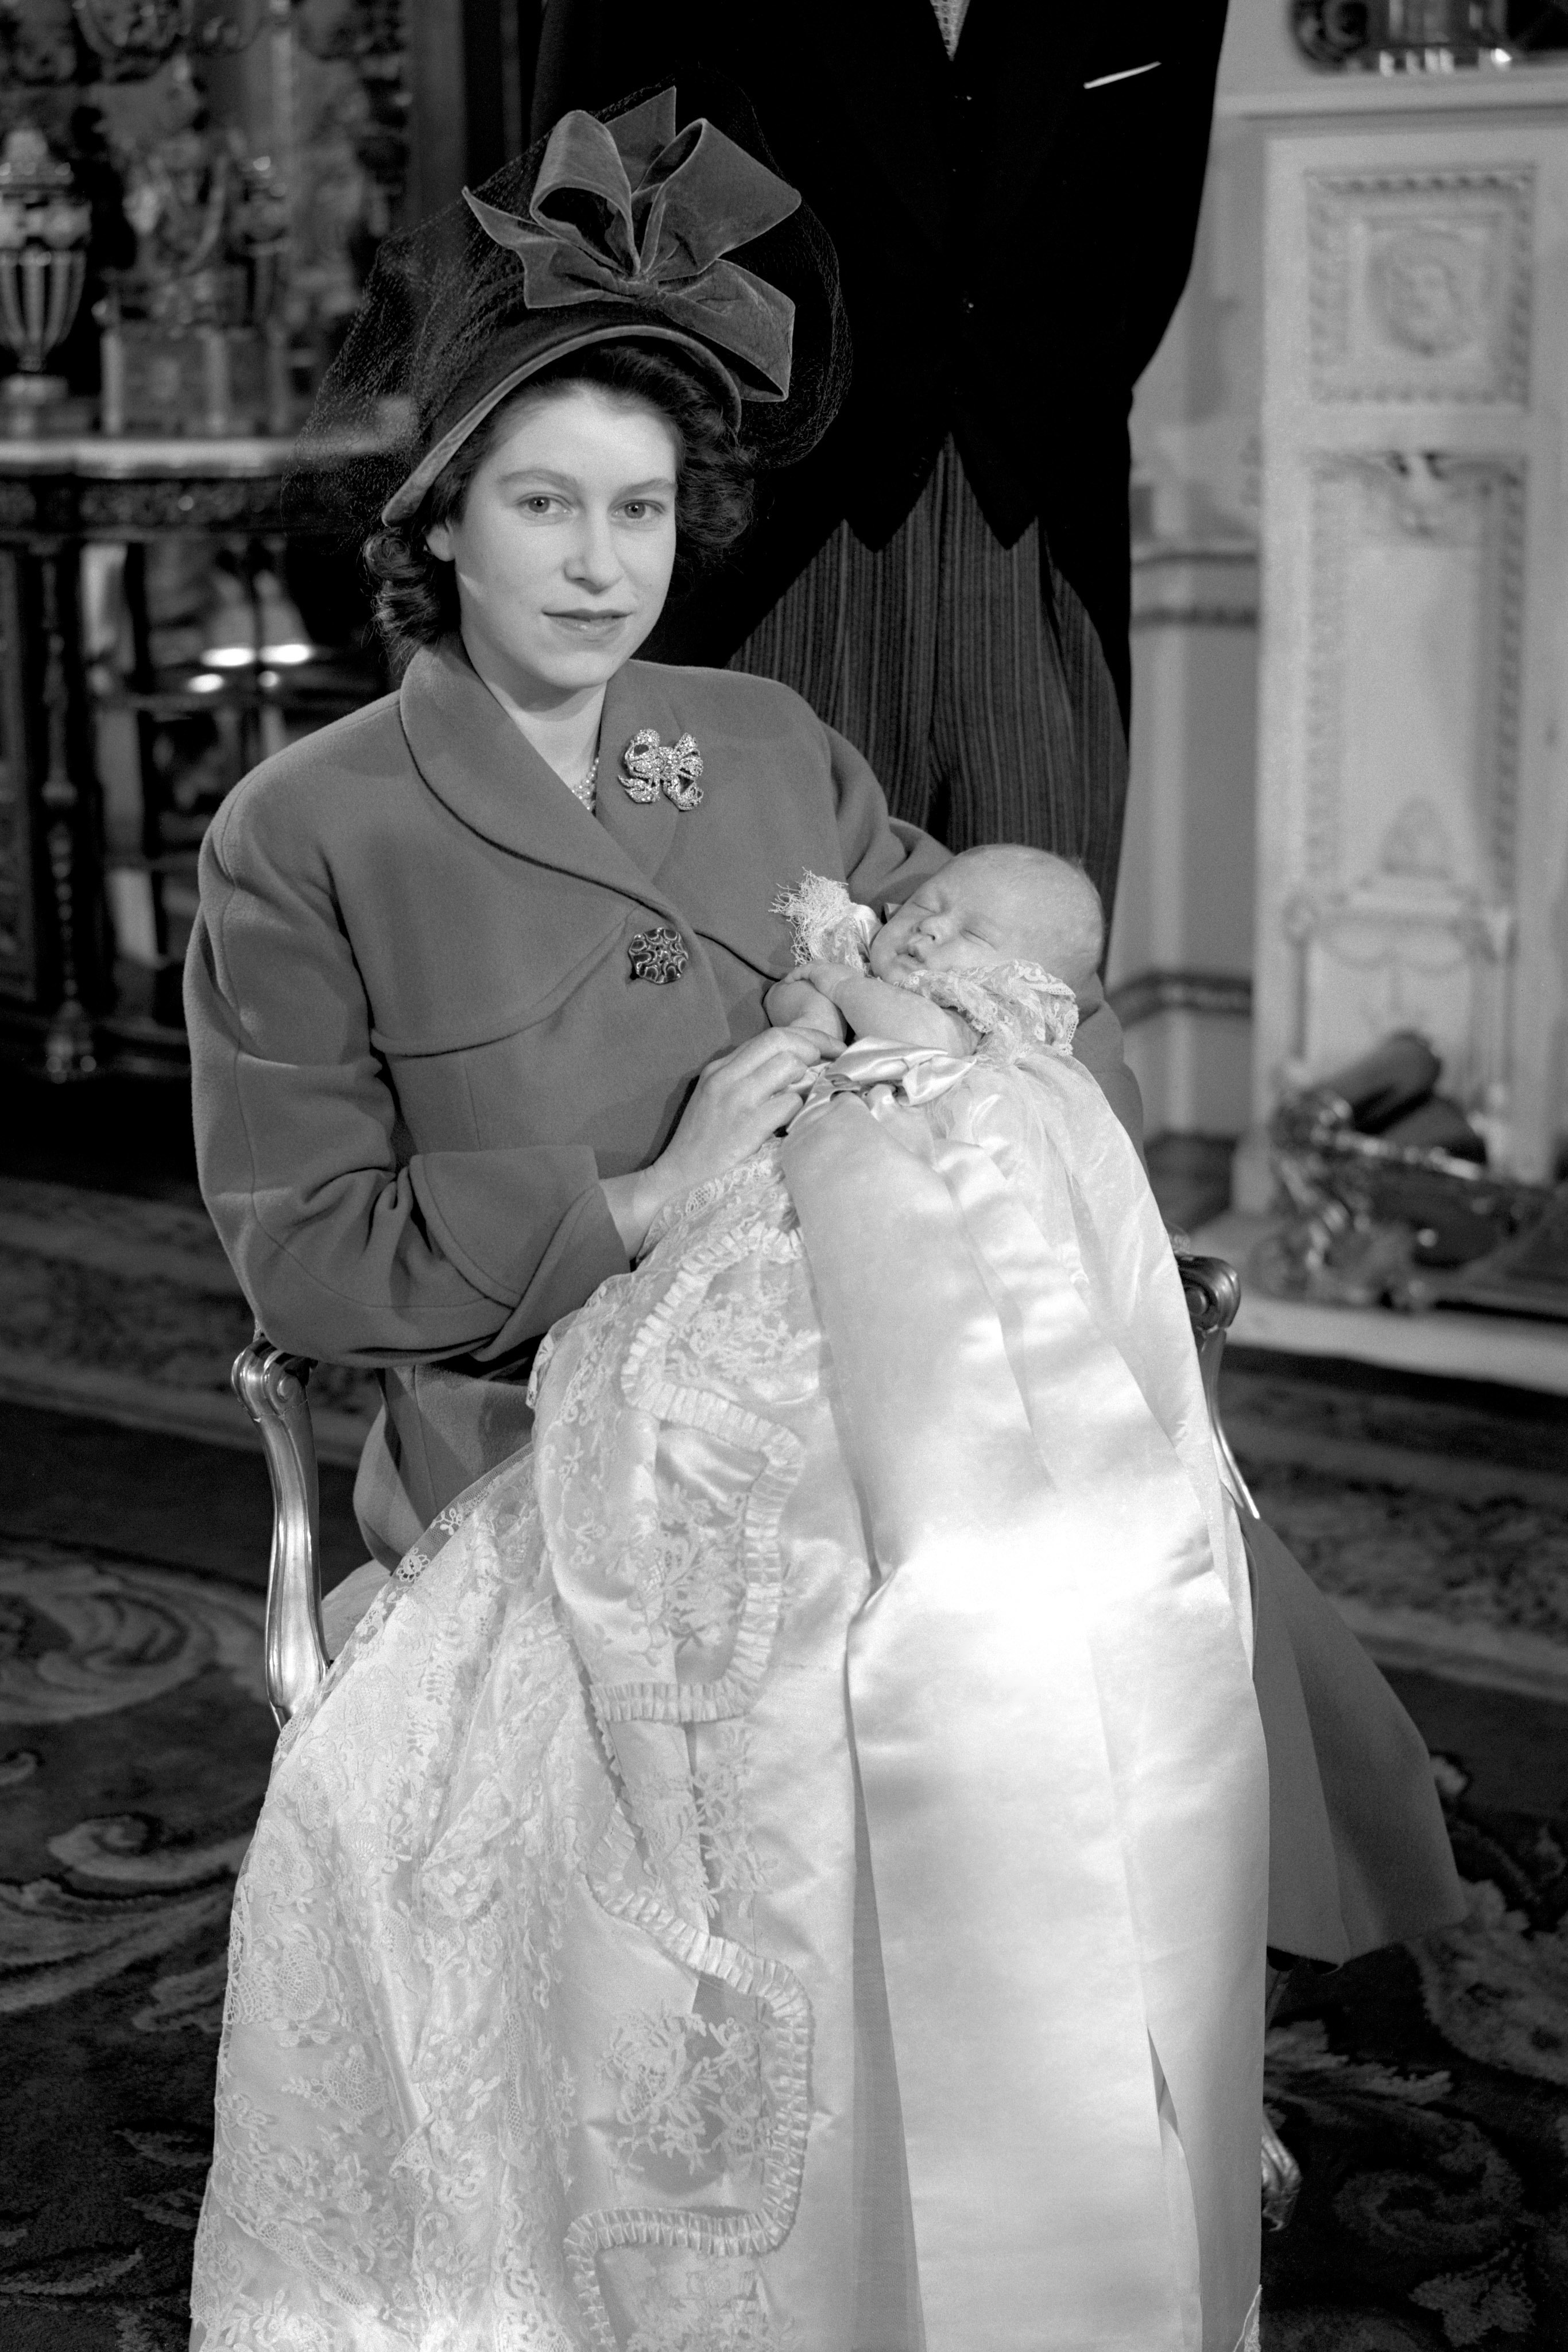 Princess Elizabeth holding her infant son, Prince Charles in 1948 